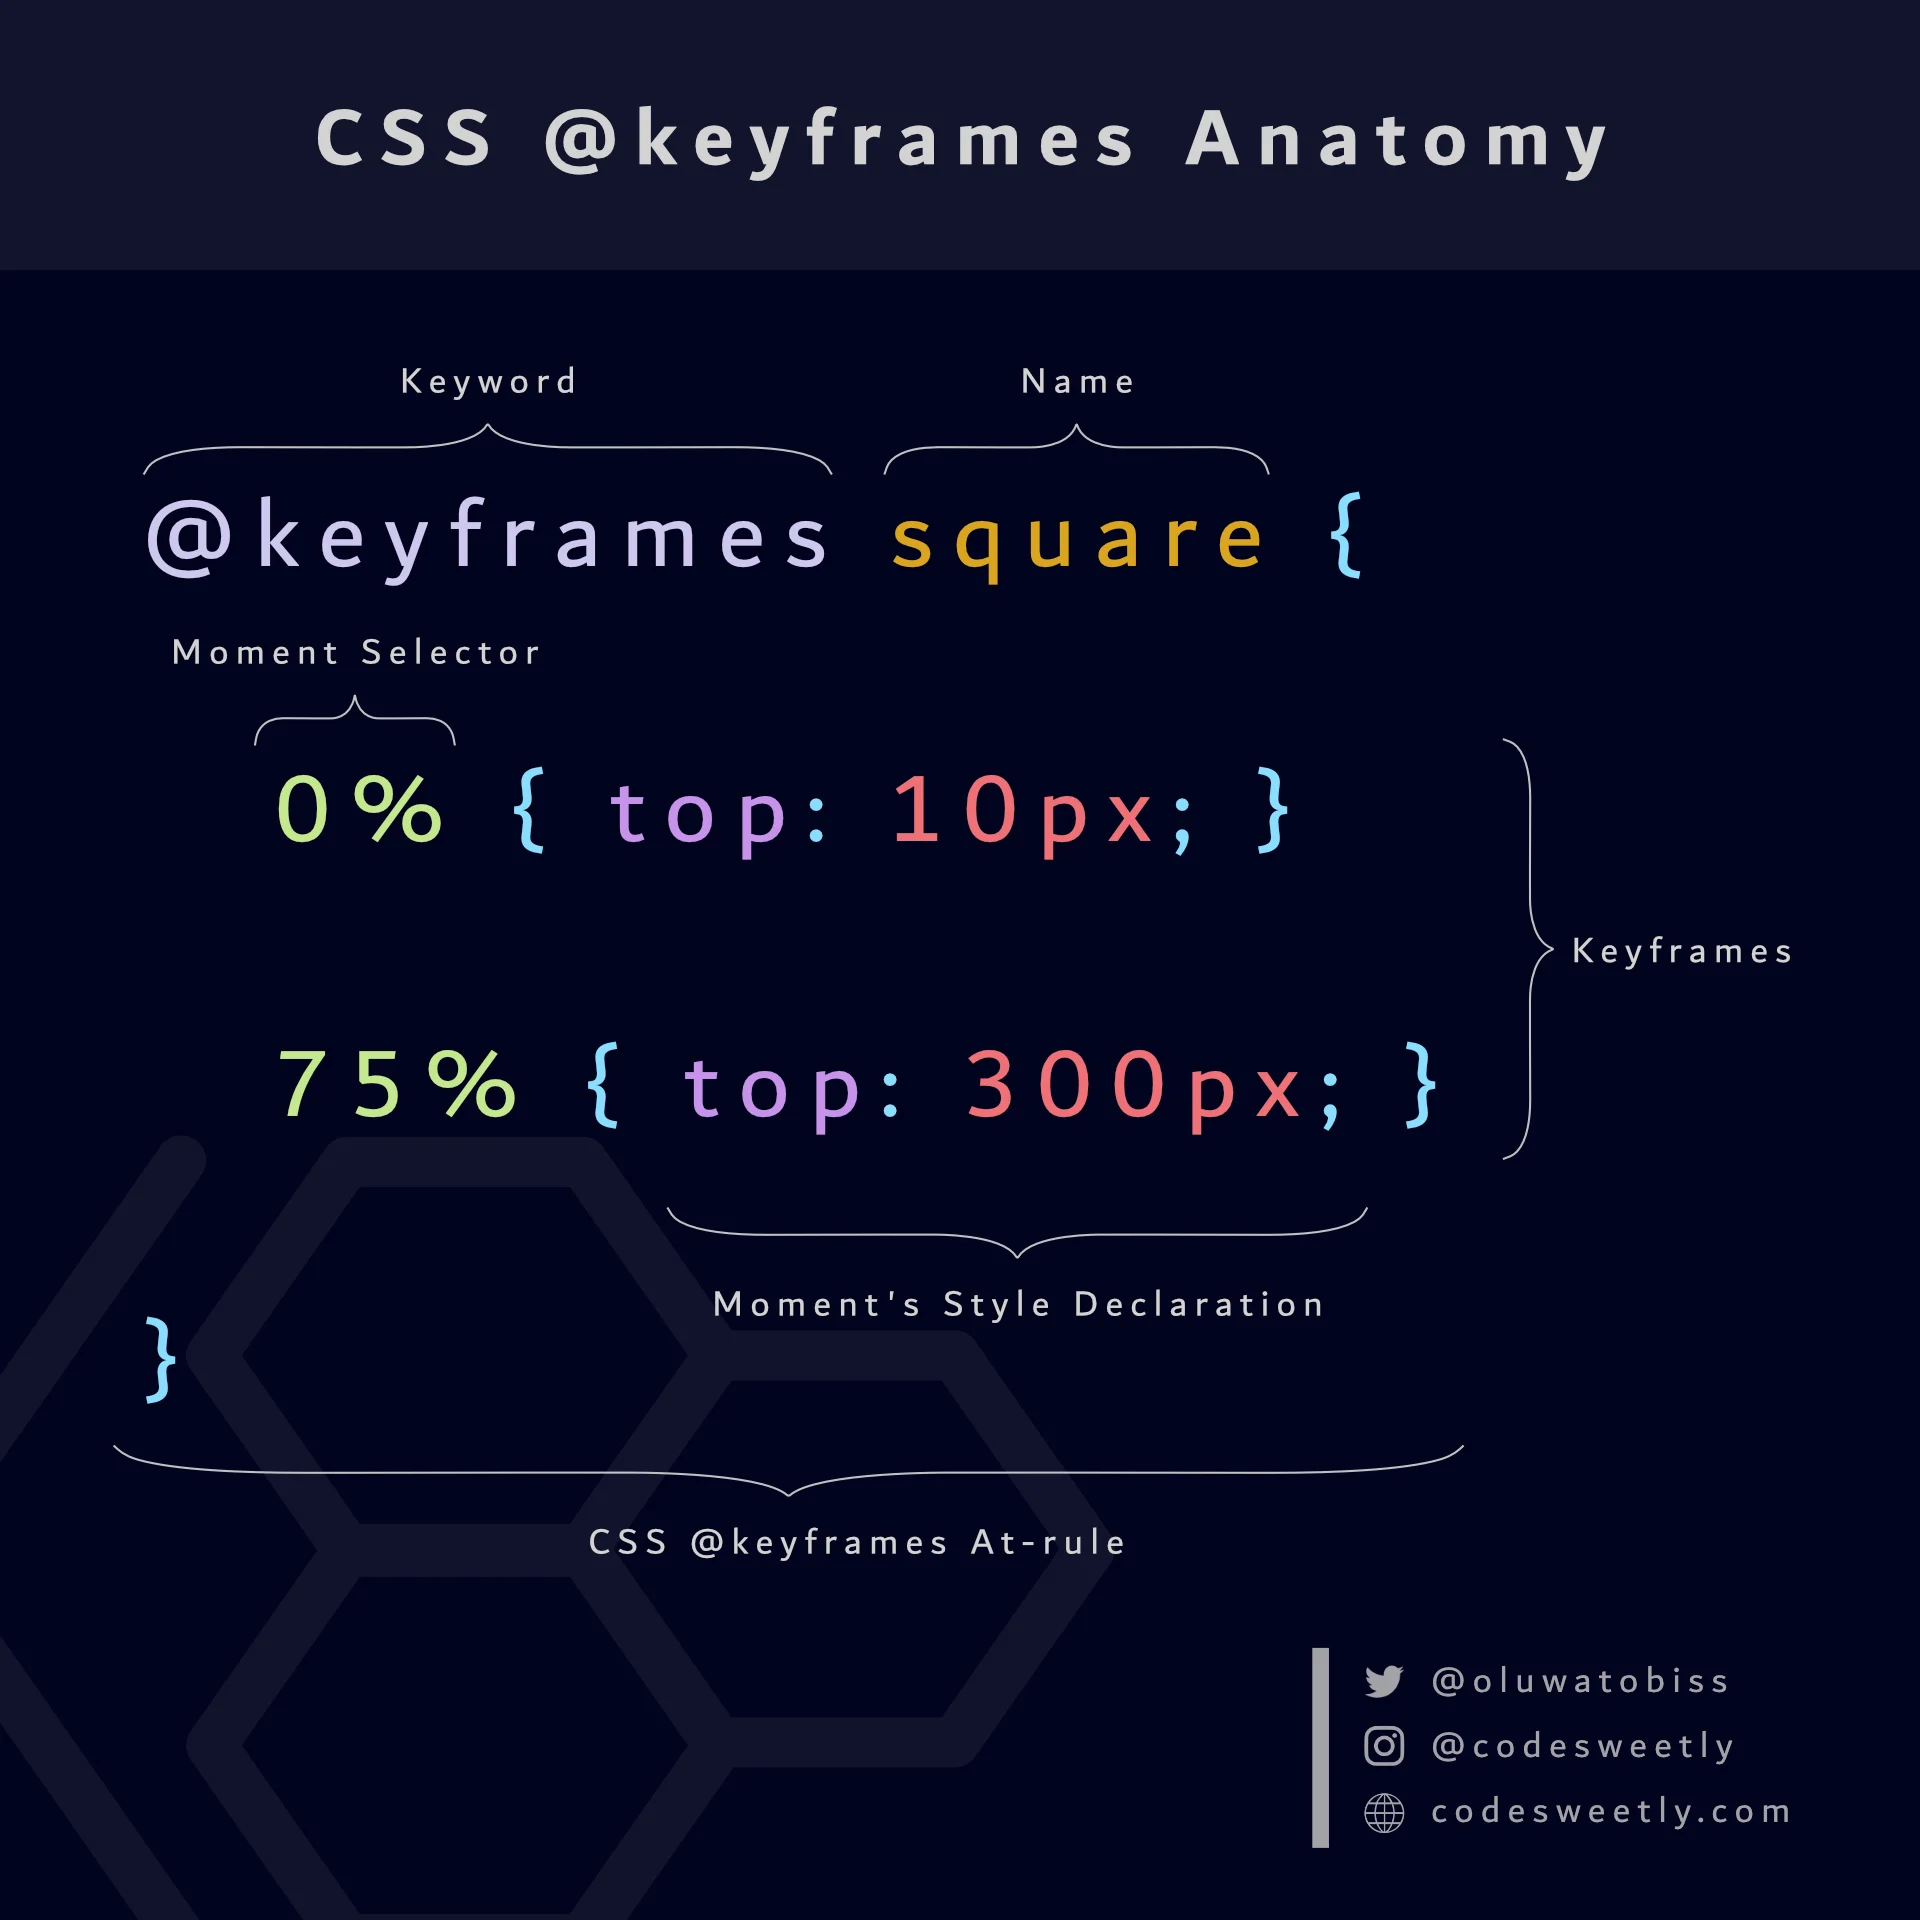 Anatomy of CSS @keyframes at-rule